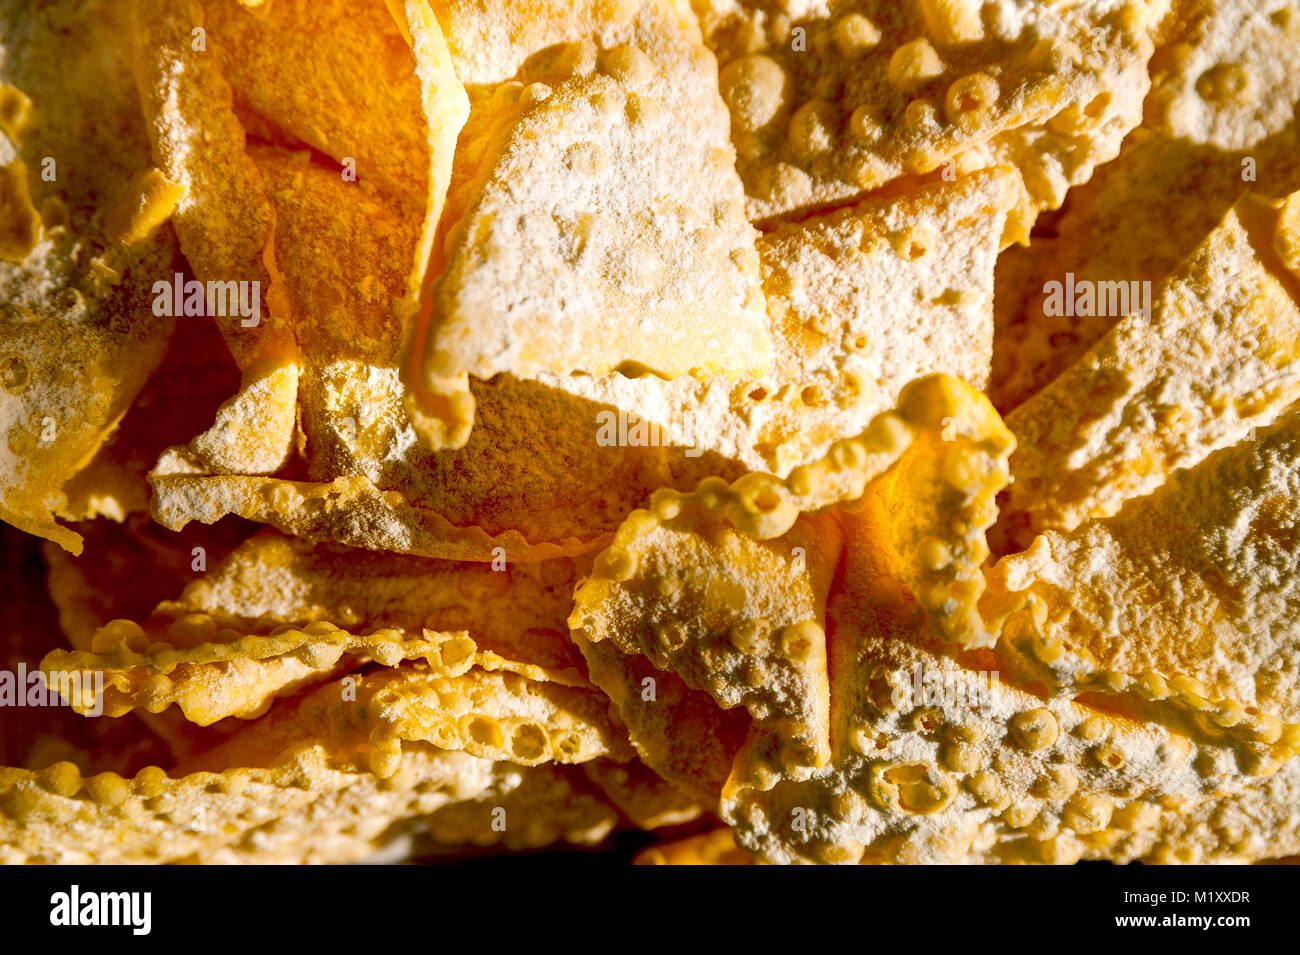 crostoli is a typical italian baked fried sweet eaten during carnival season Stock Photo